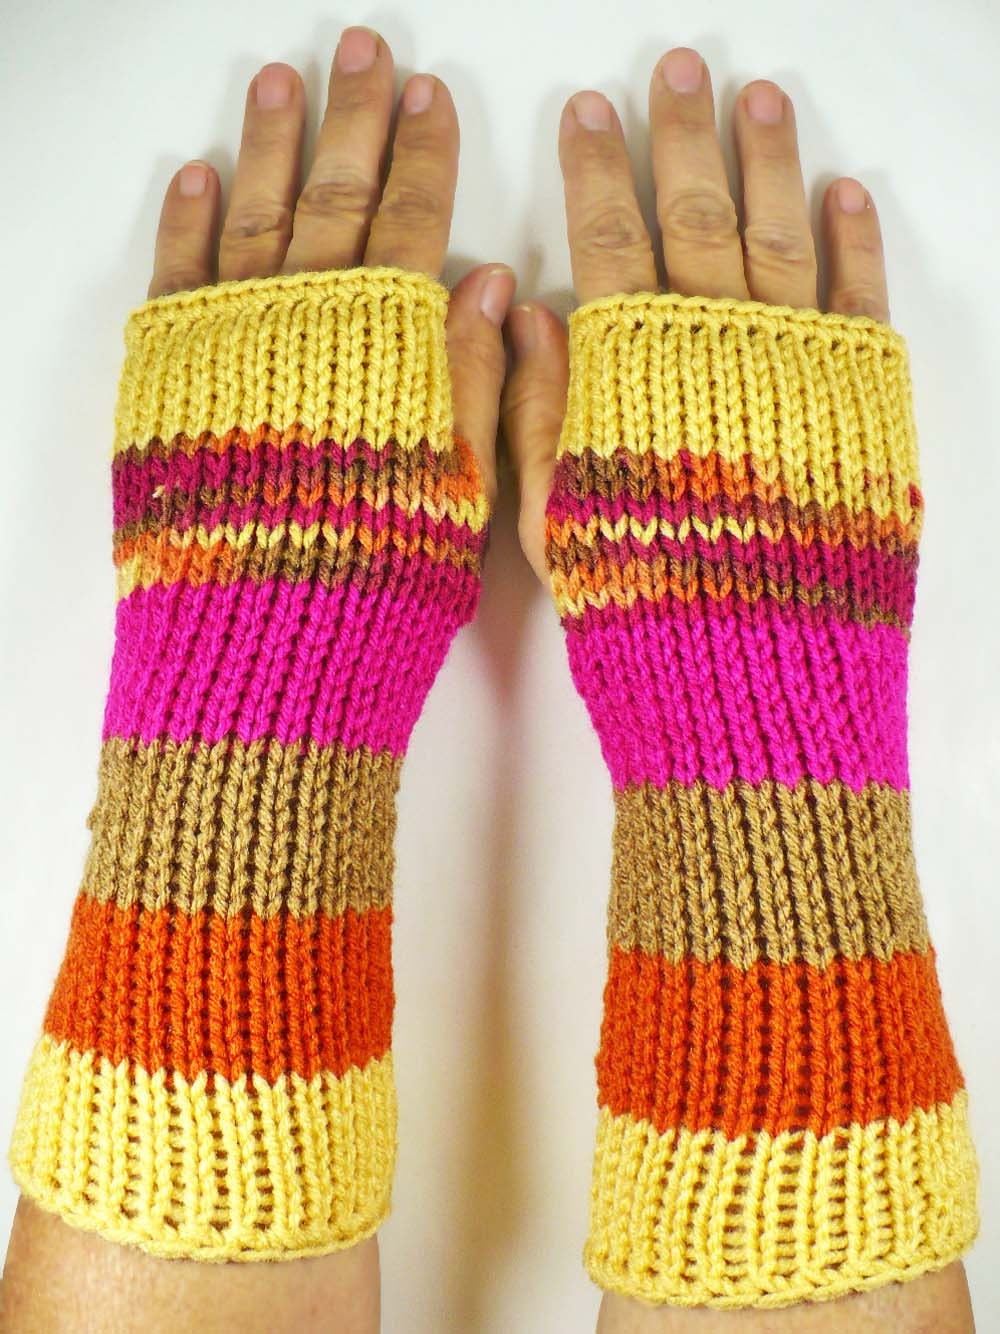 Knit Fingerless Gloves Knit Arm Warmers Knit Wrist Warmers Knit Hand Warmers Knit Fingerless Mittens Yellow Brown Fuchsia Orange - Nothingbutstring